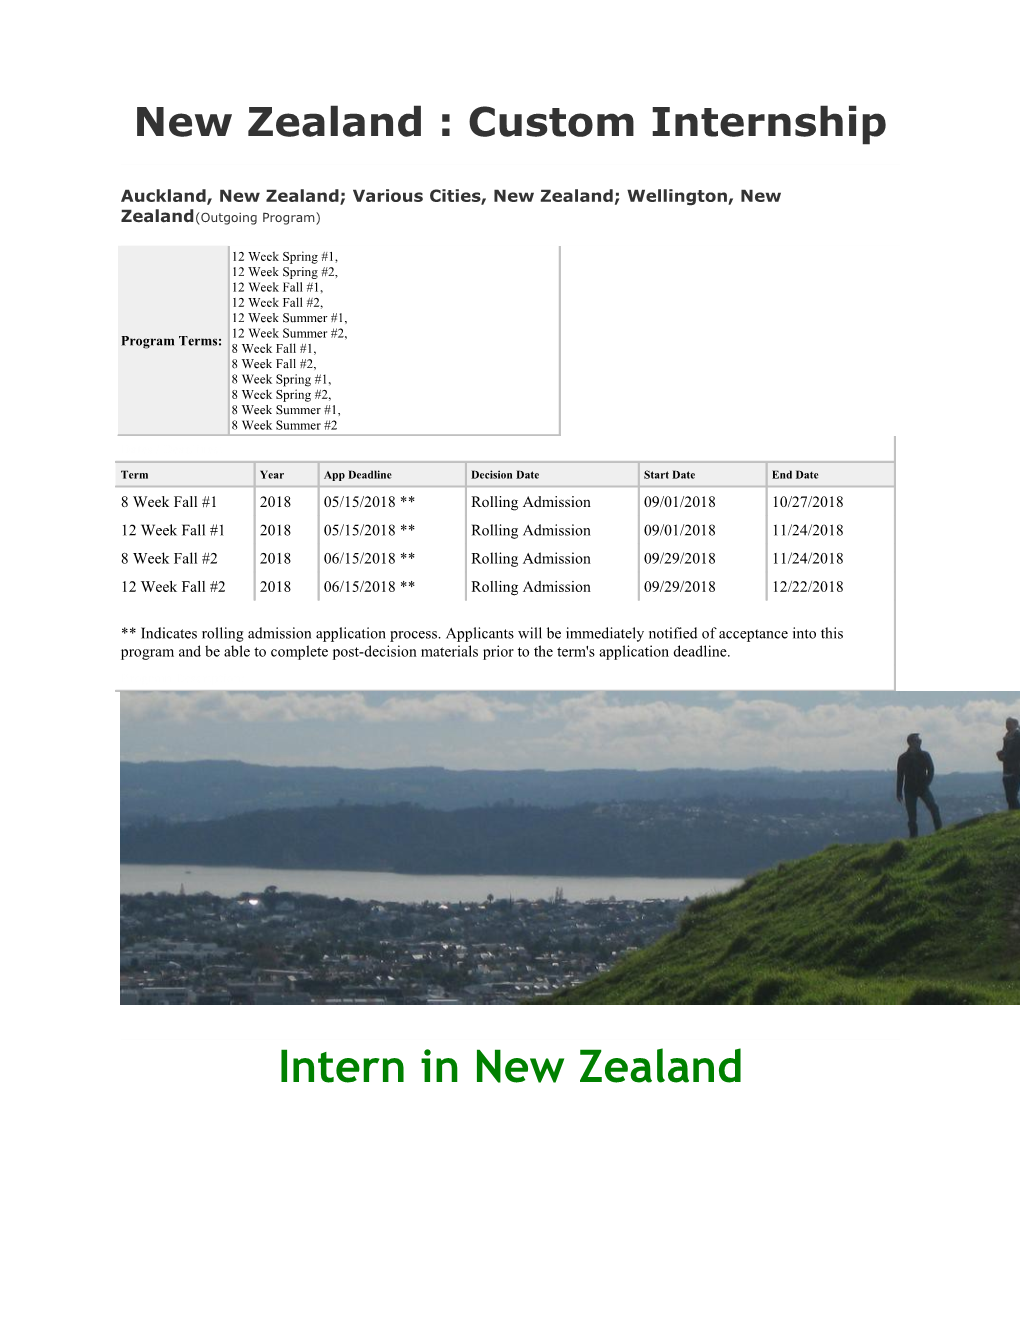 New Zealand: Custom Internship